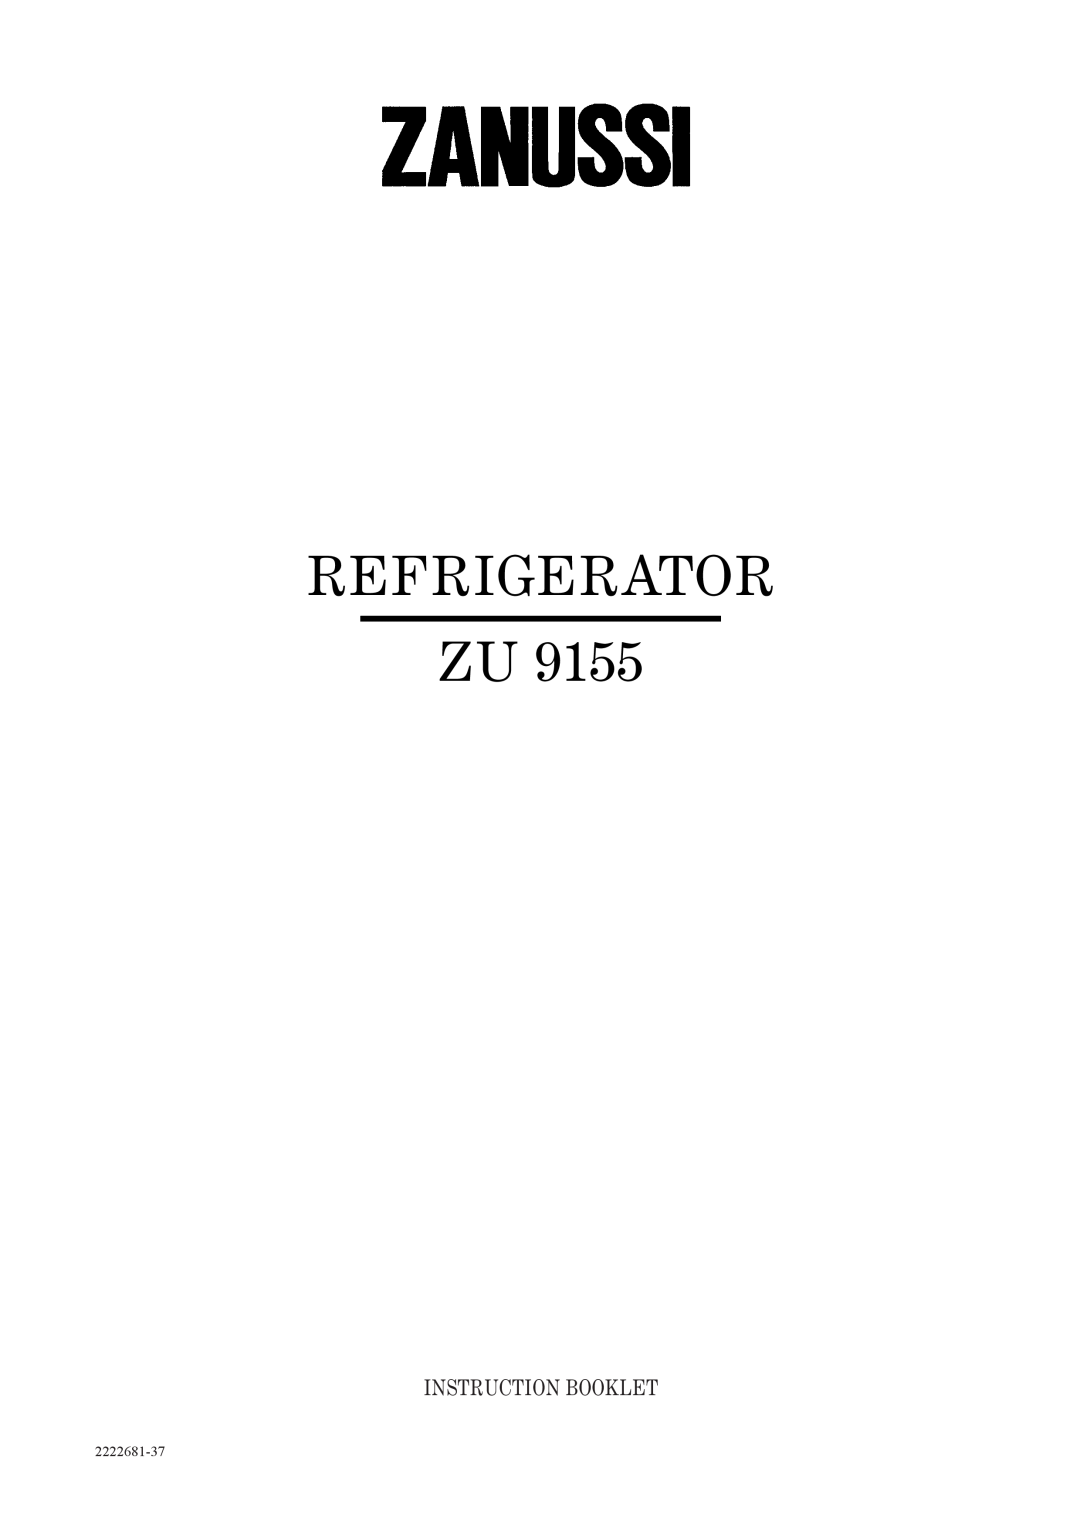 Zanussi ZU 9155 manual Refrigerator, Instruction Booklet, 2222681-37 